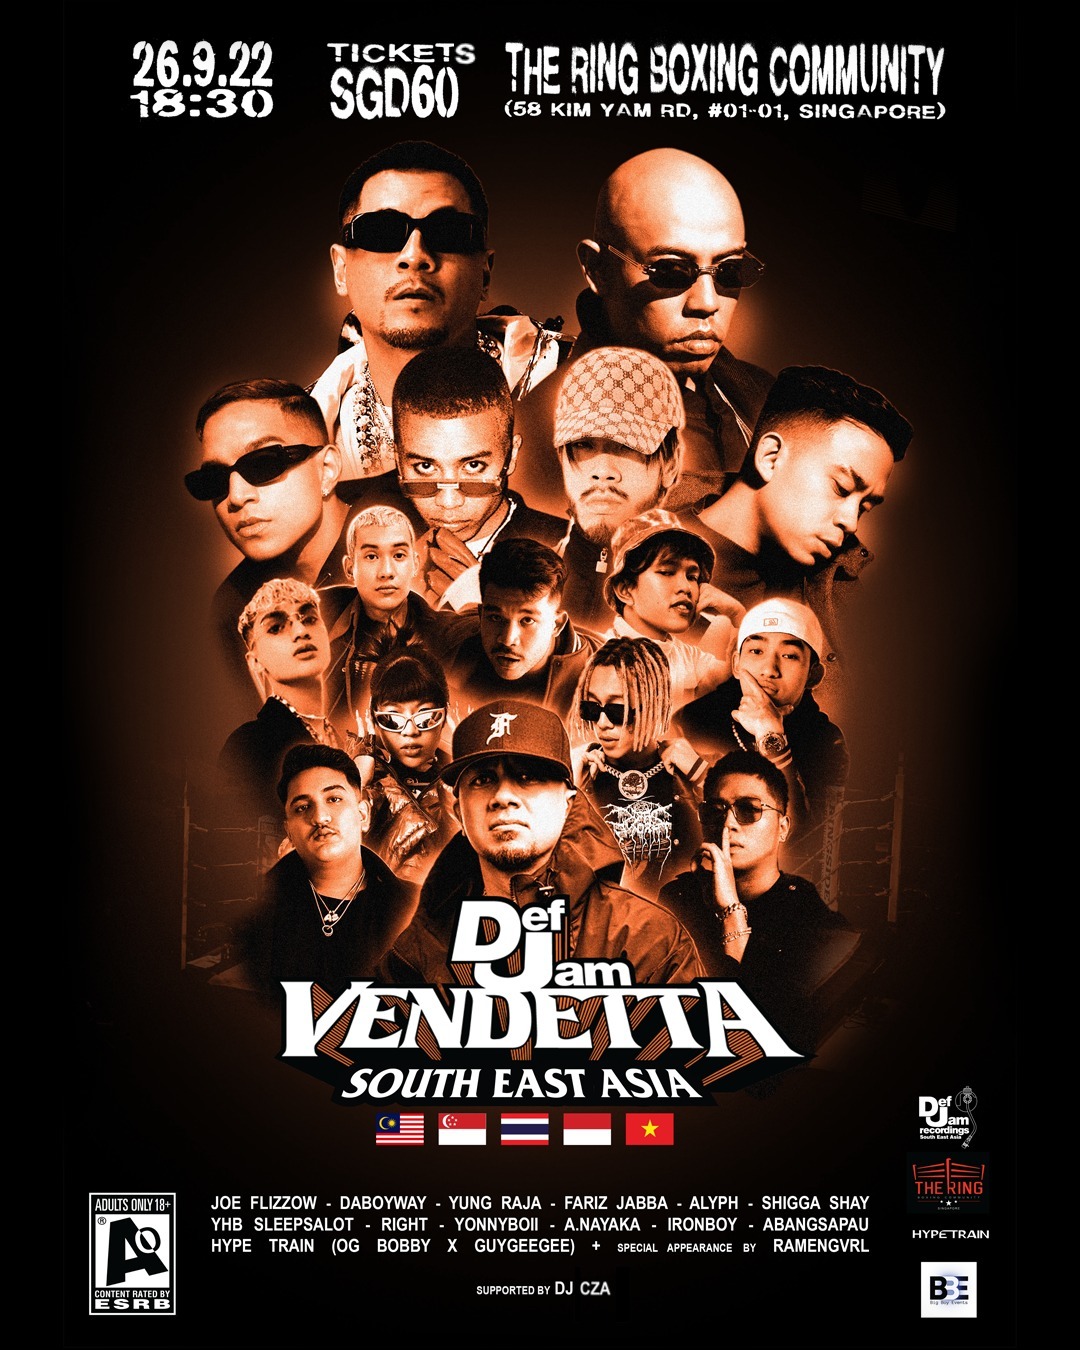 Def Jam Vendetta celebrates Hip Hop from the region